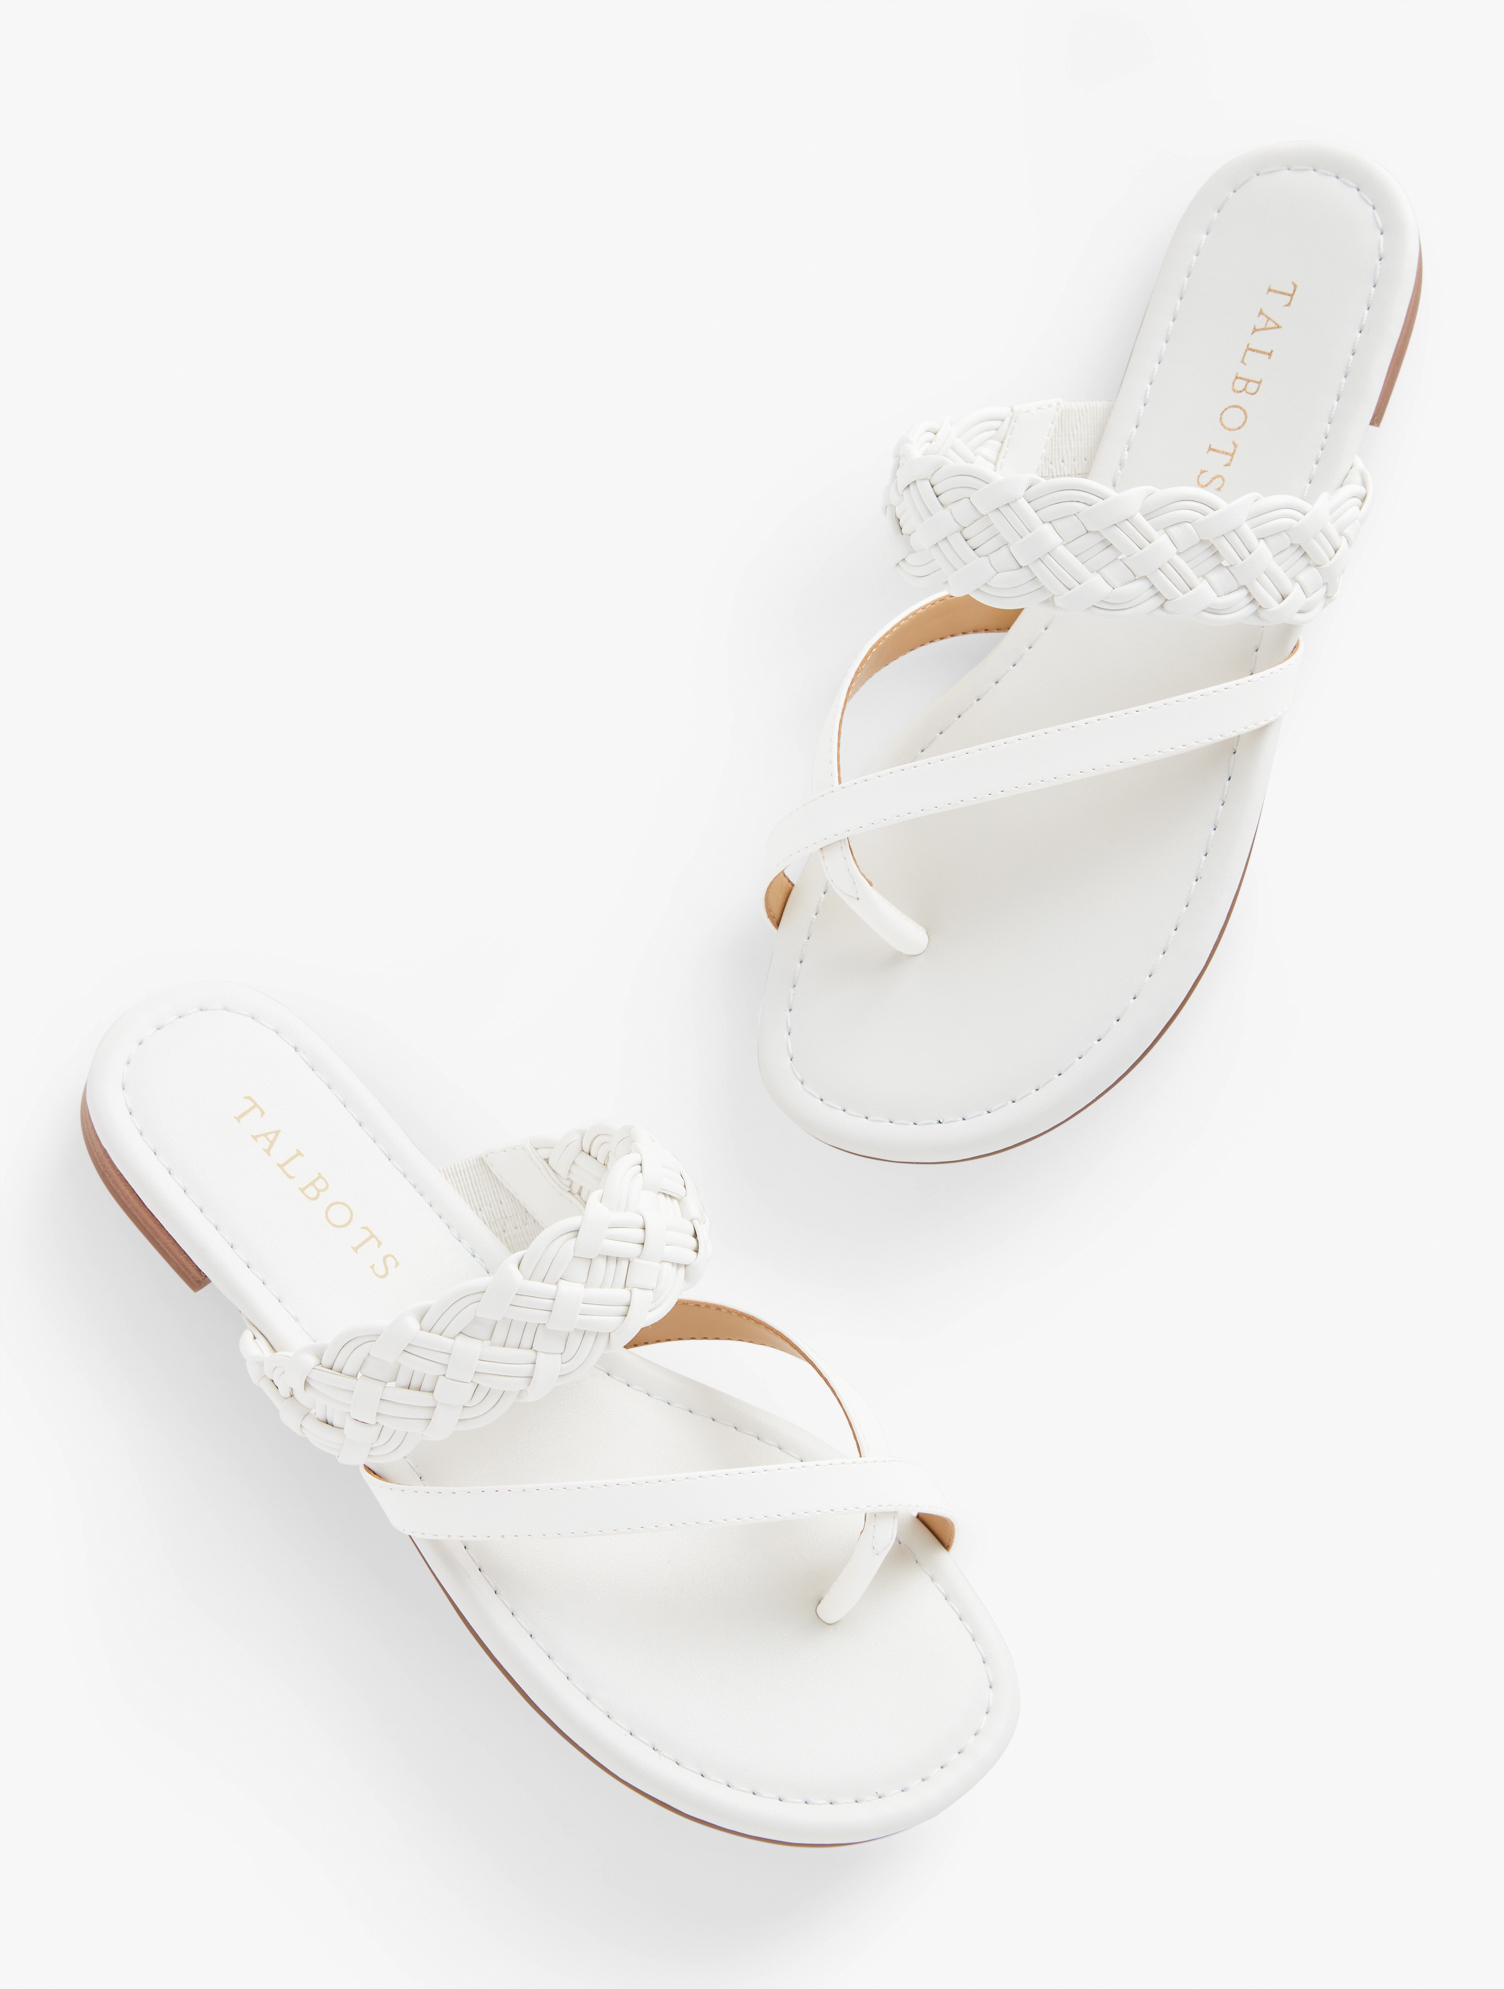 Talbots Gia Braided Sandals - White - 11m